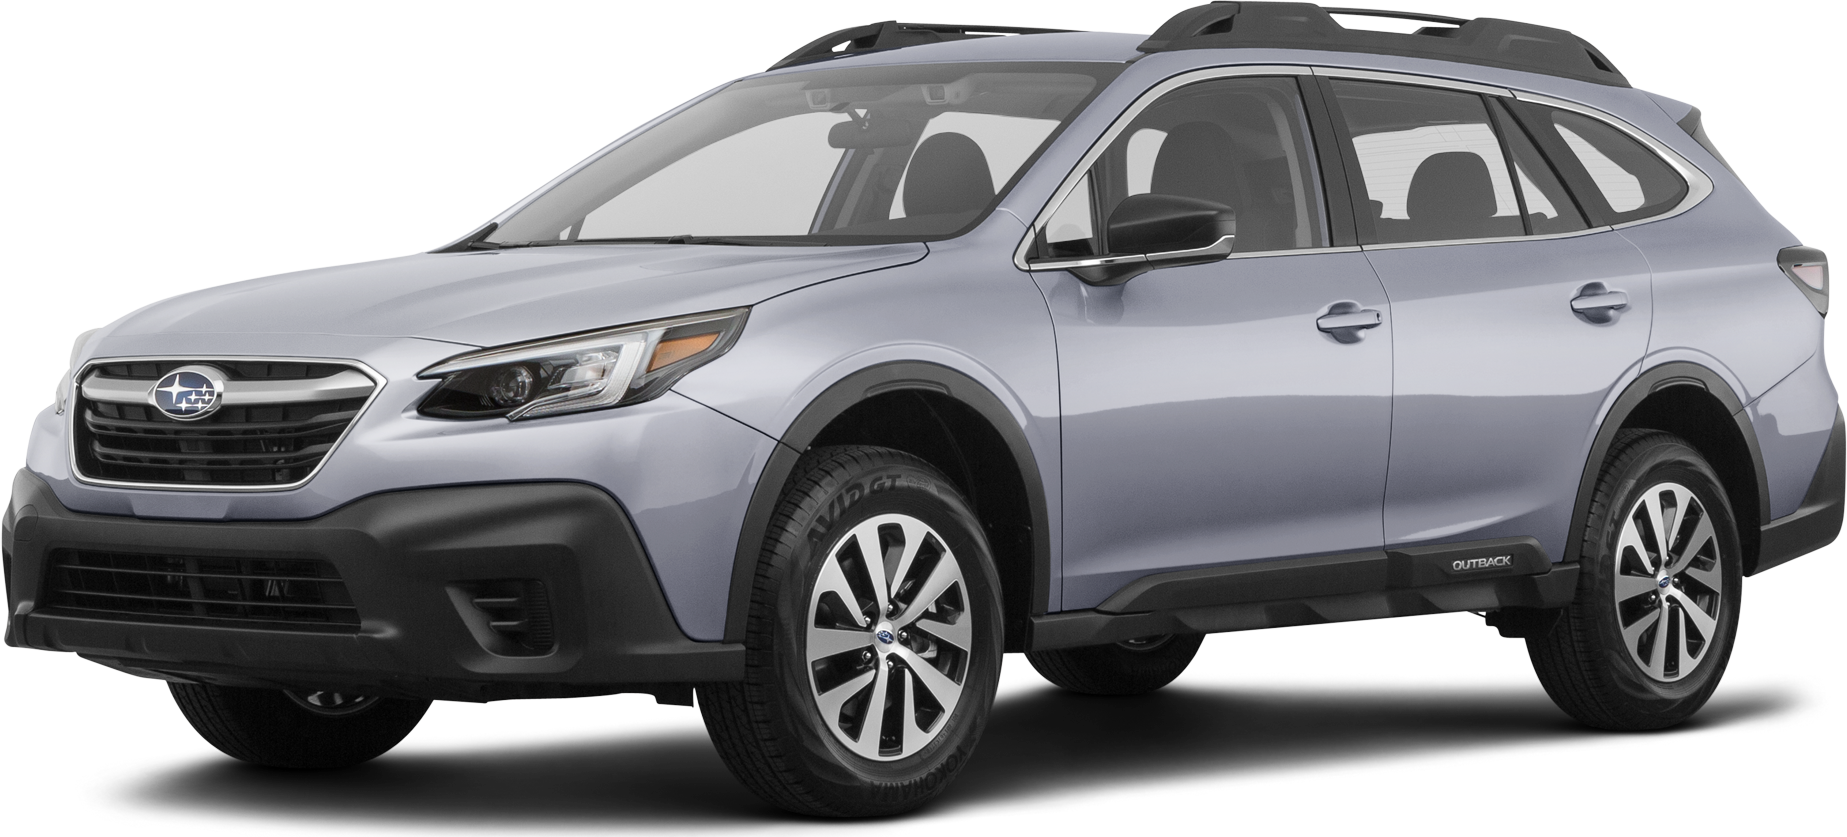 2022 Subaru Outback Reviews, Pricing & Specs | Kelley Blue Book